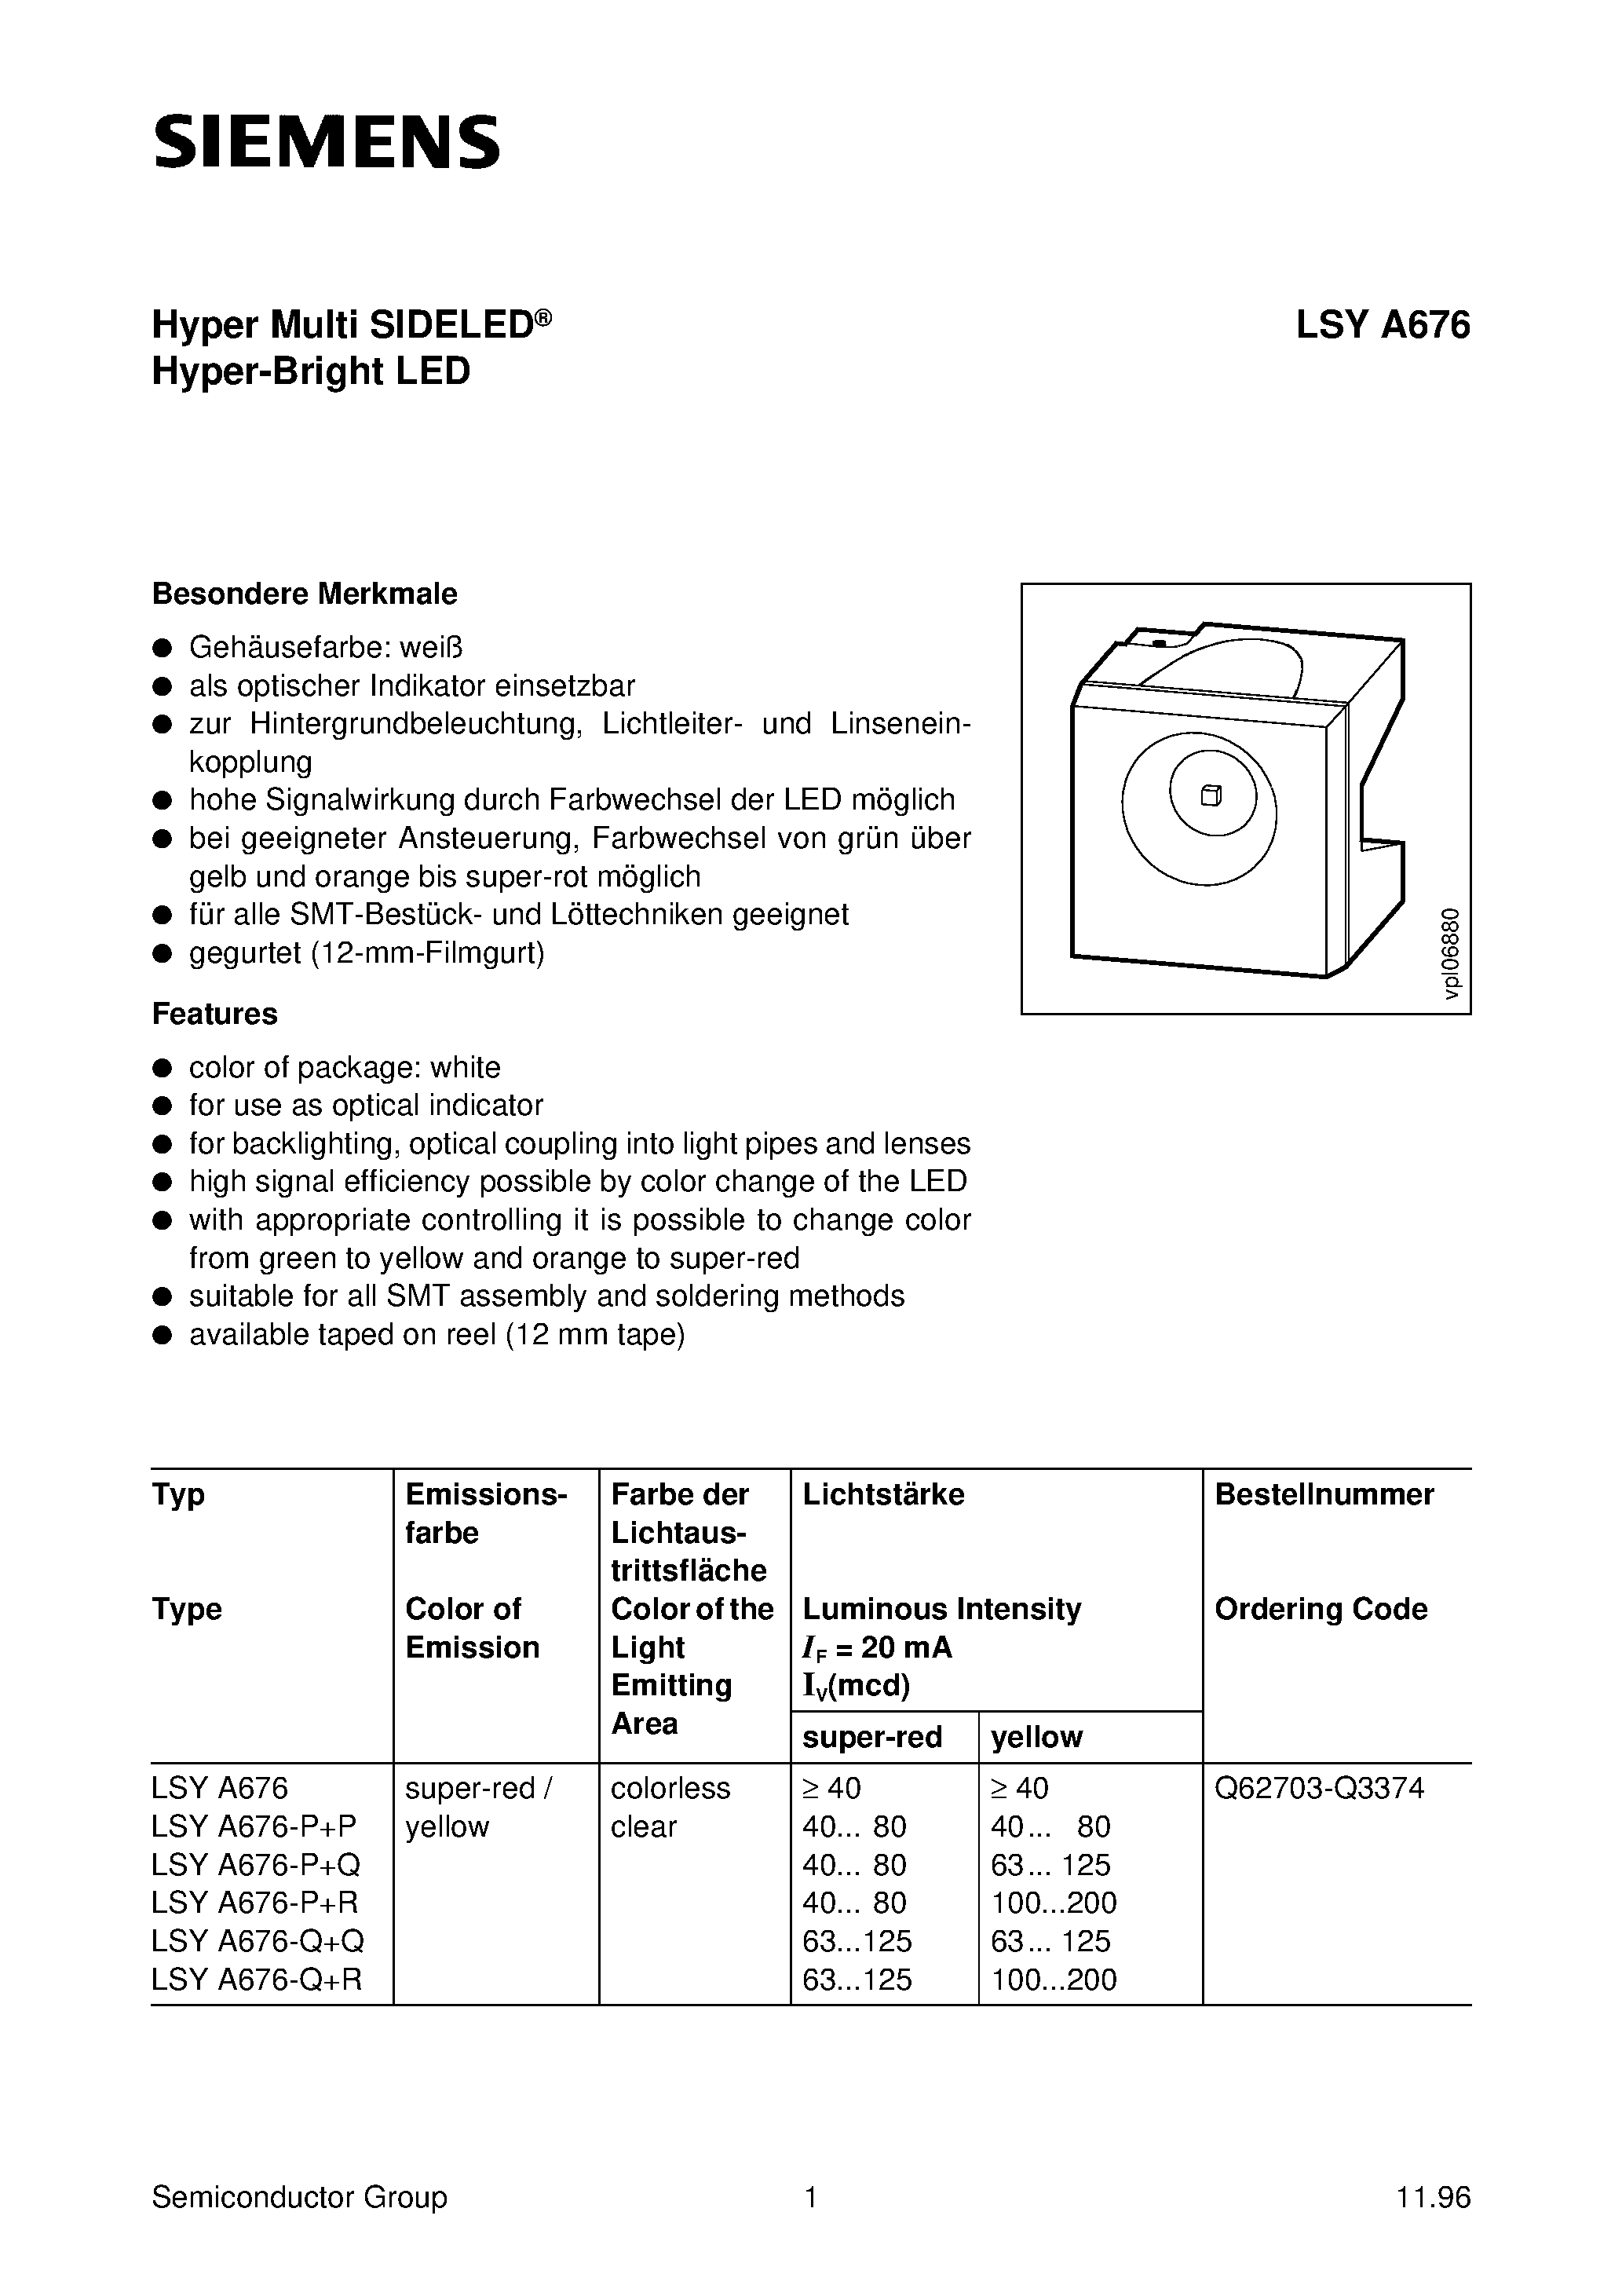 Даташит LSYA676-P+P - Hyper Multi SIDELED Hyper-Bright LED страница 1